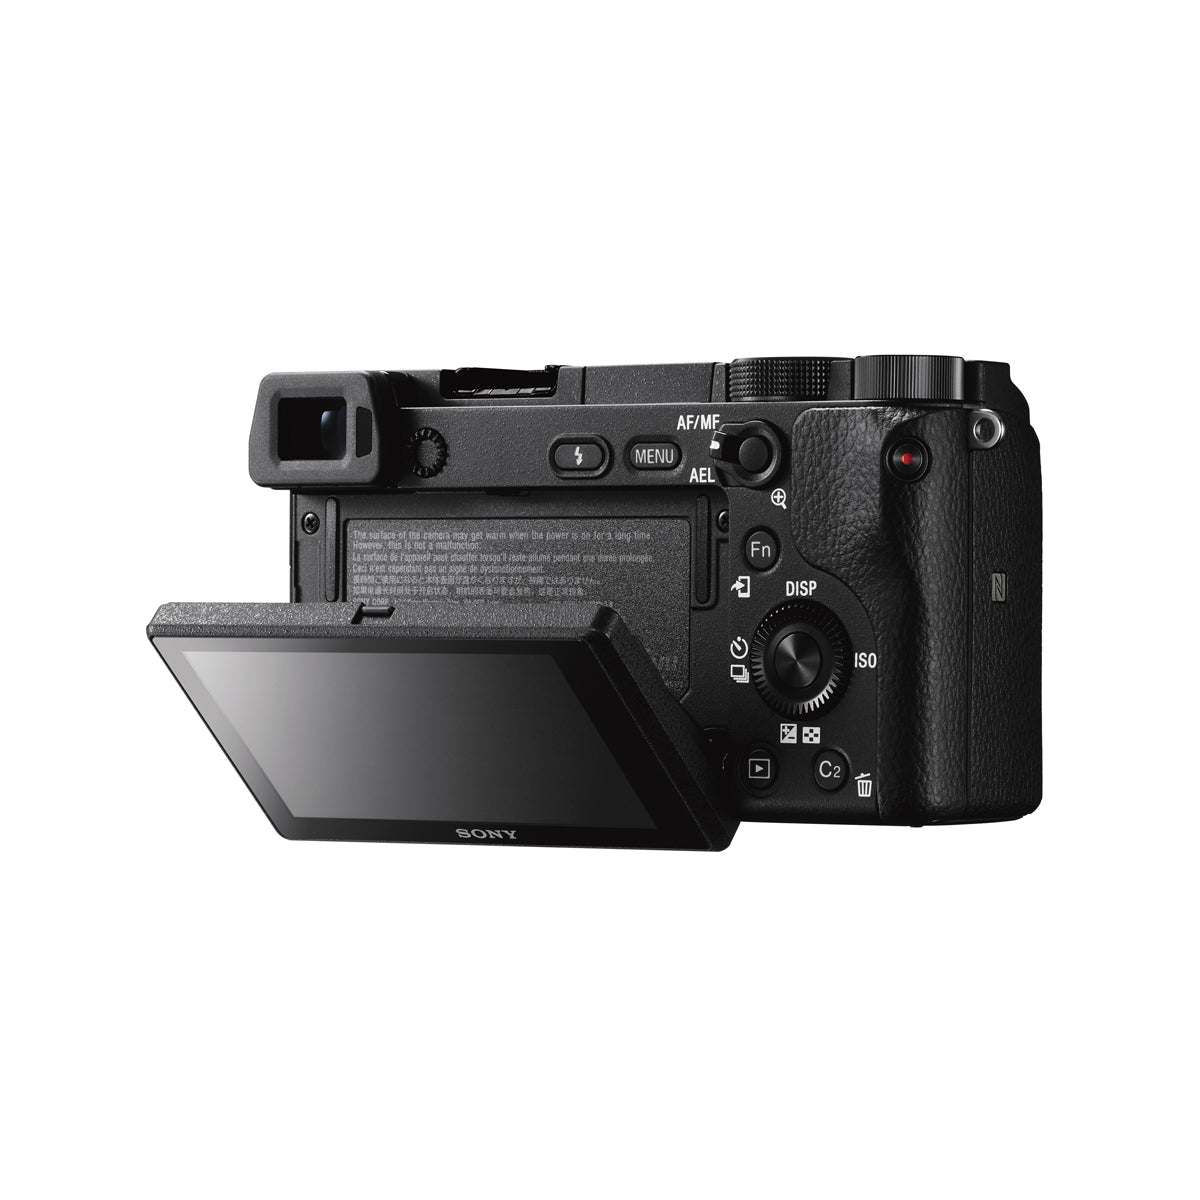 Sony Alpha a6300 Mirrorless Digital Camera with E-Mount 18-135mm Lens (Black)